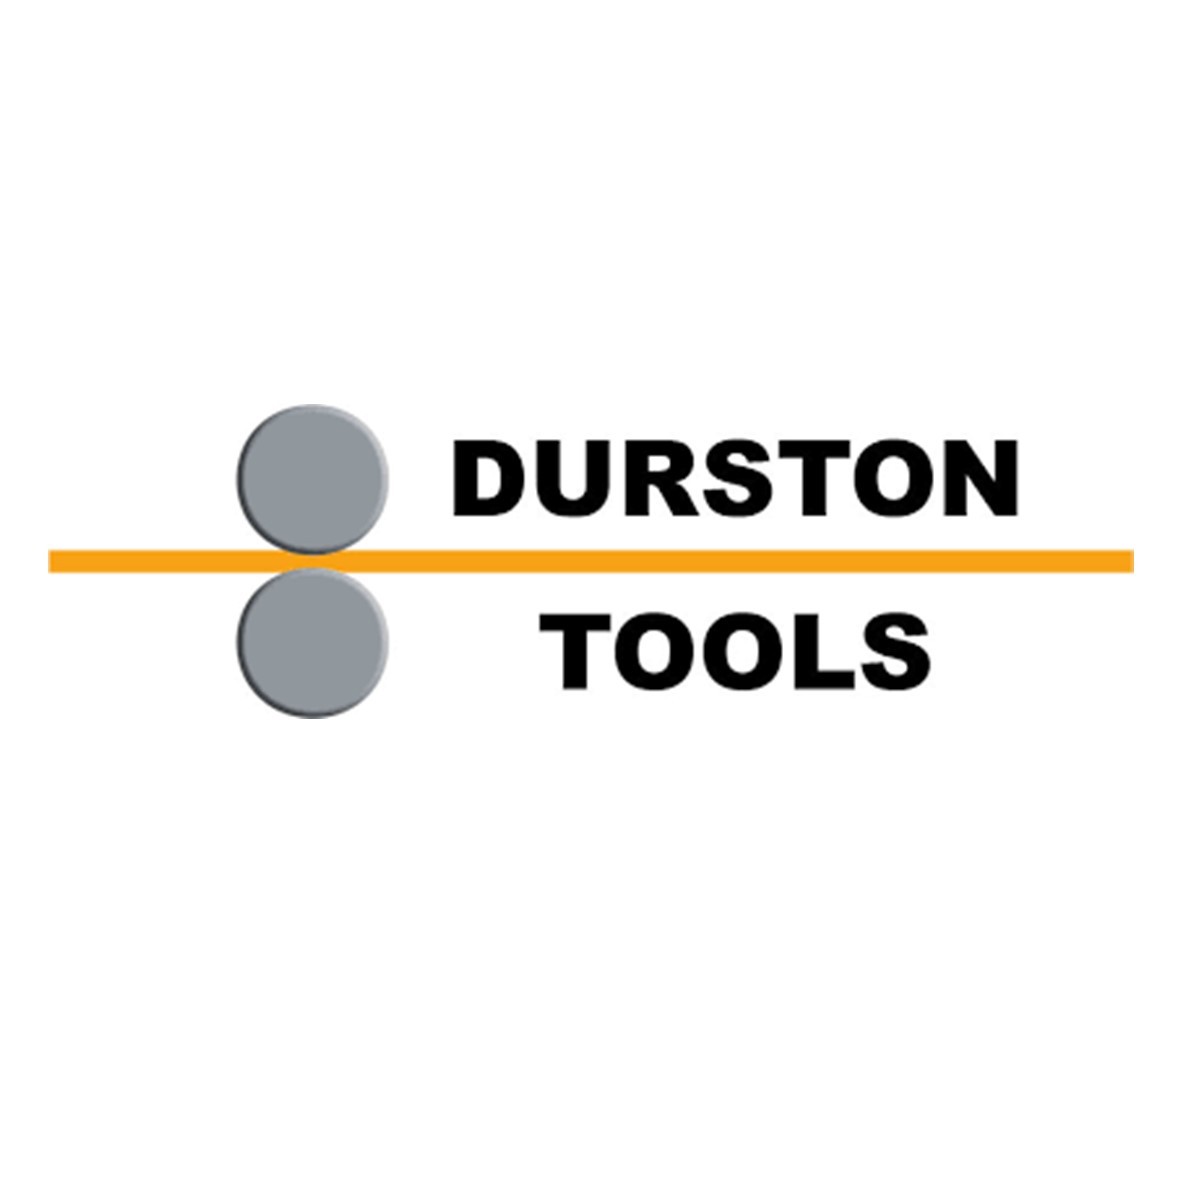 Durston tools